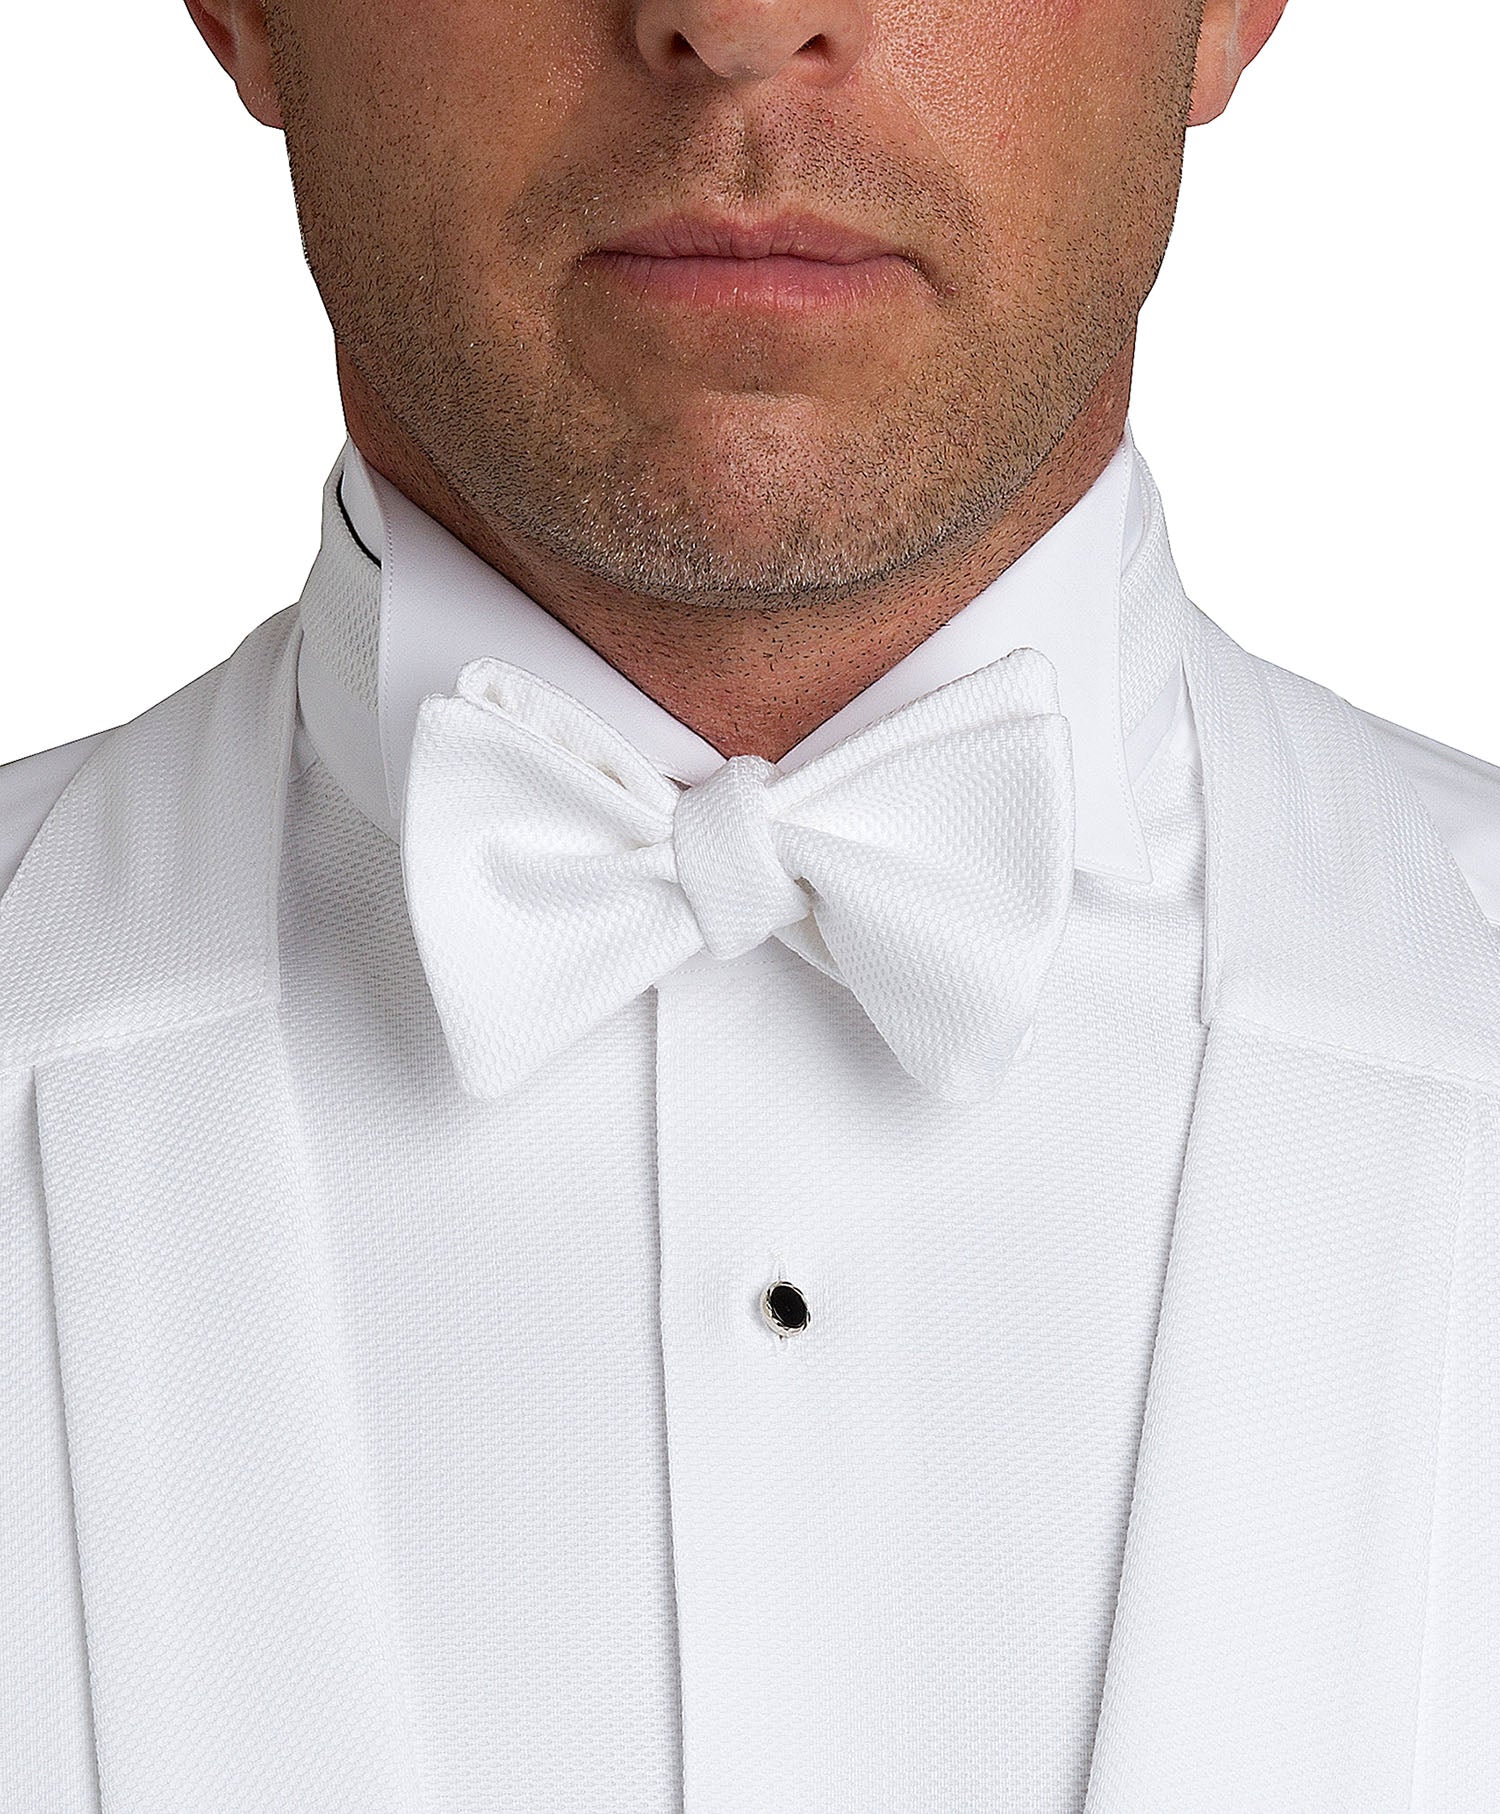 Man wearing white bowtie